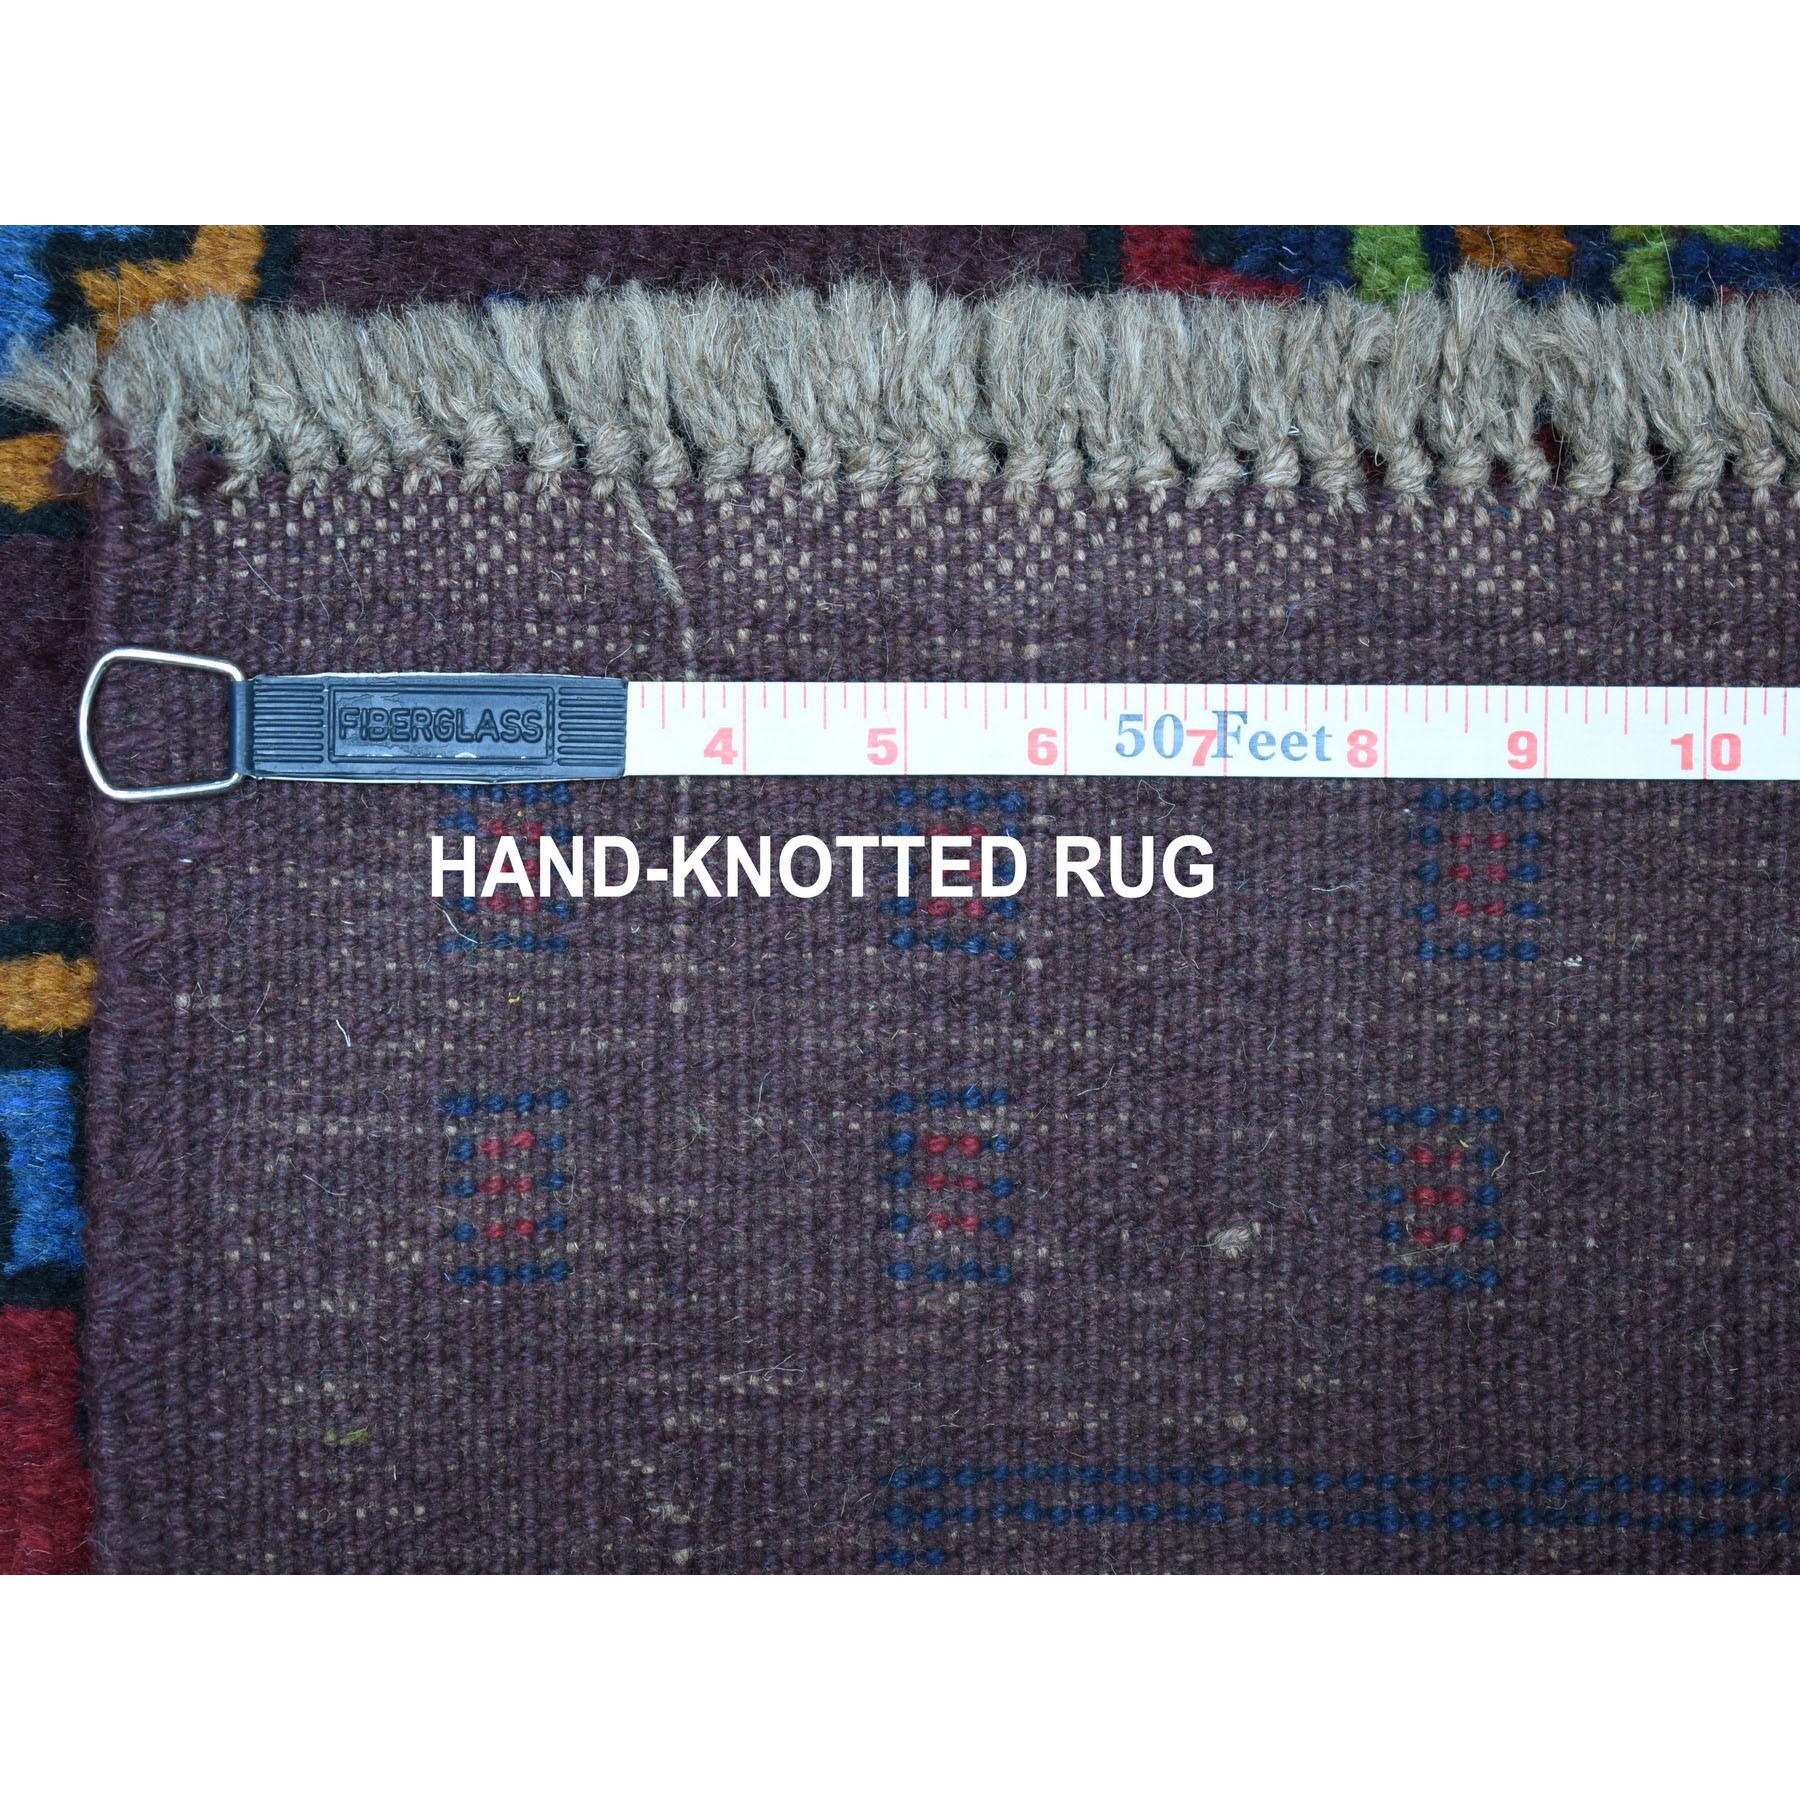 5'10"x7'8" Purple Geometric Design Colorful Afghan Baluch Hand Woven Pure Wool Oriental Rug 